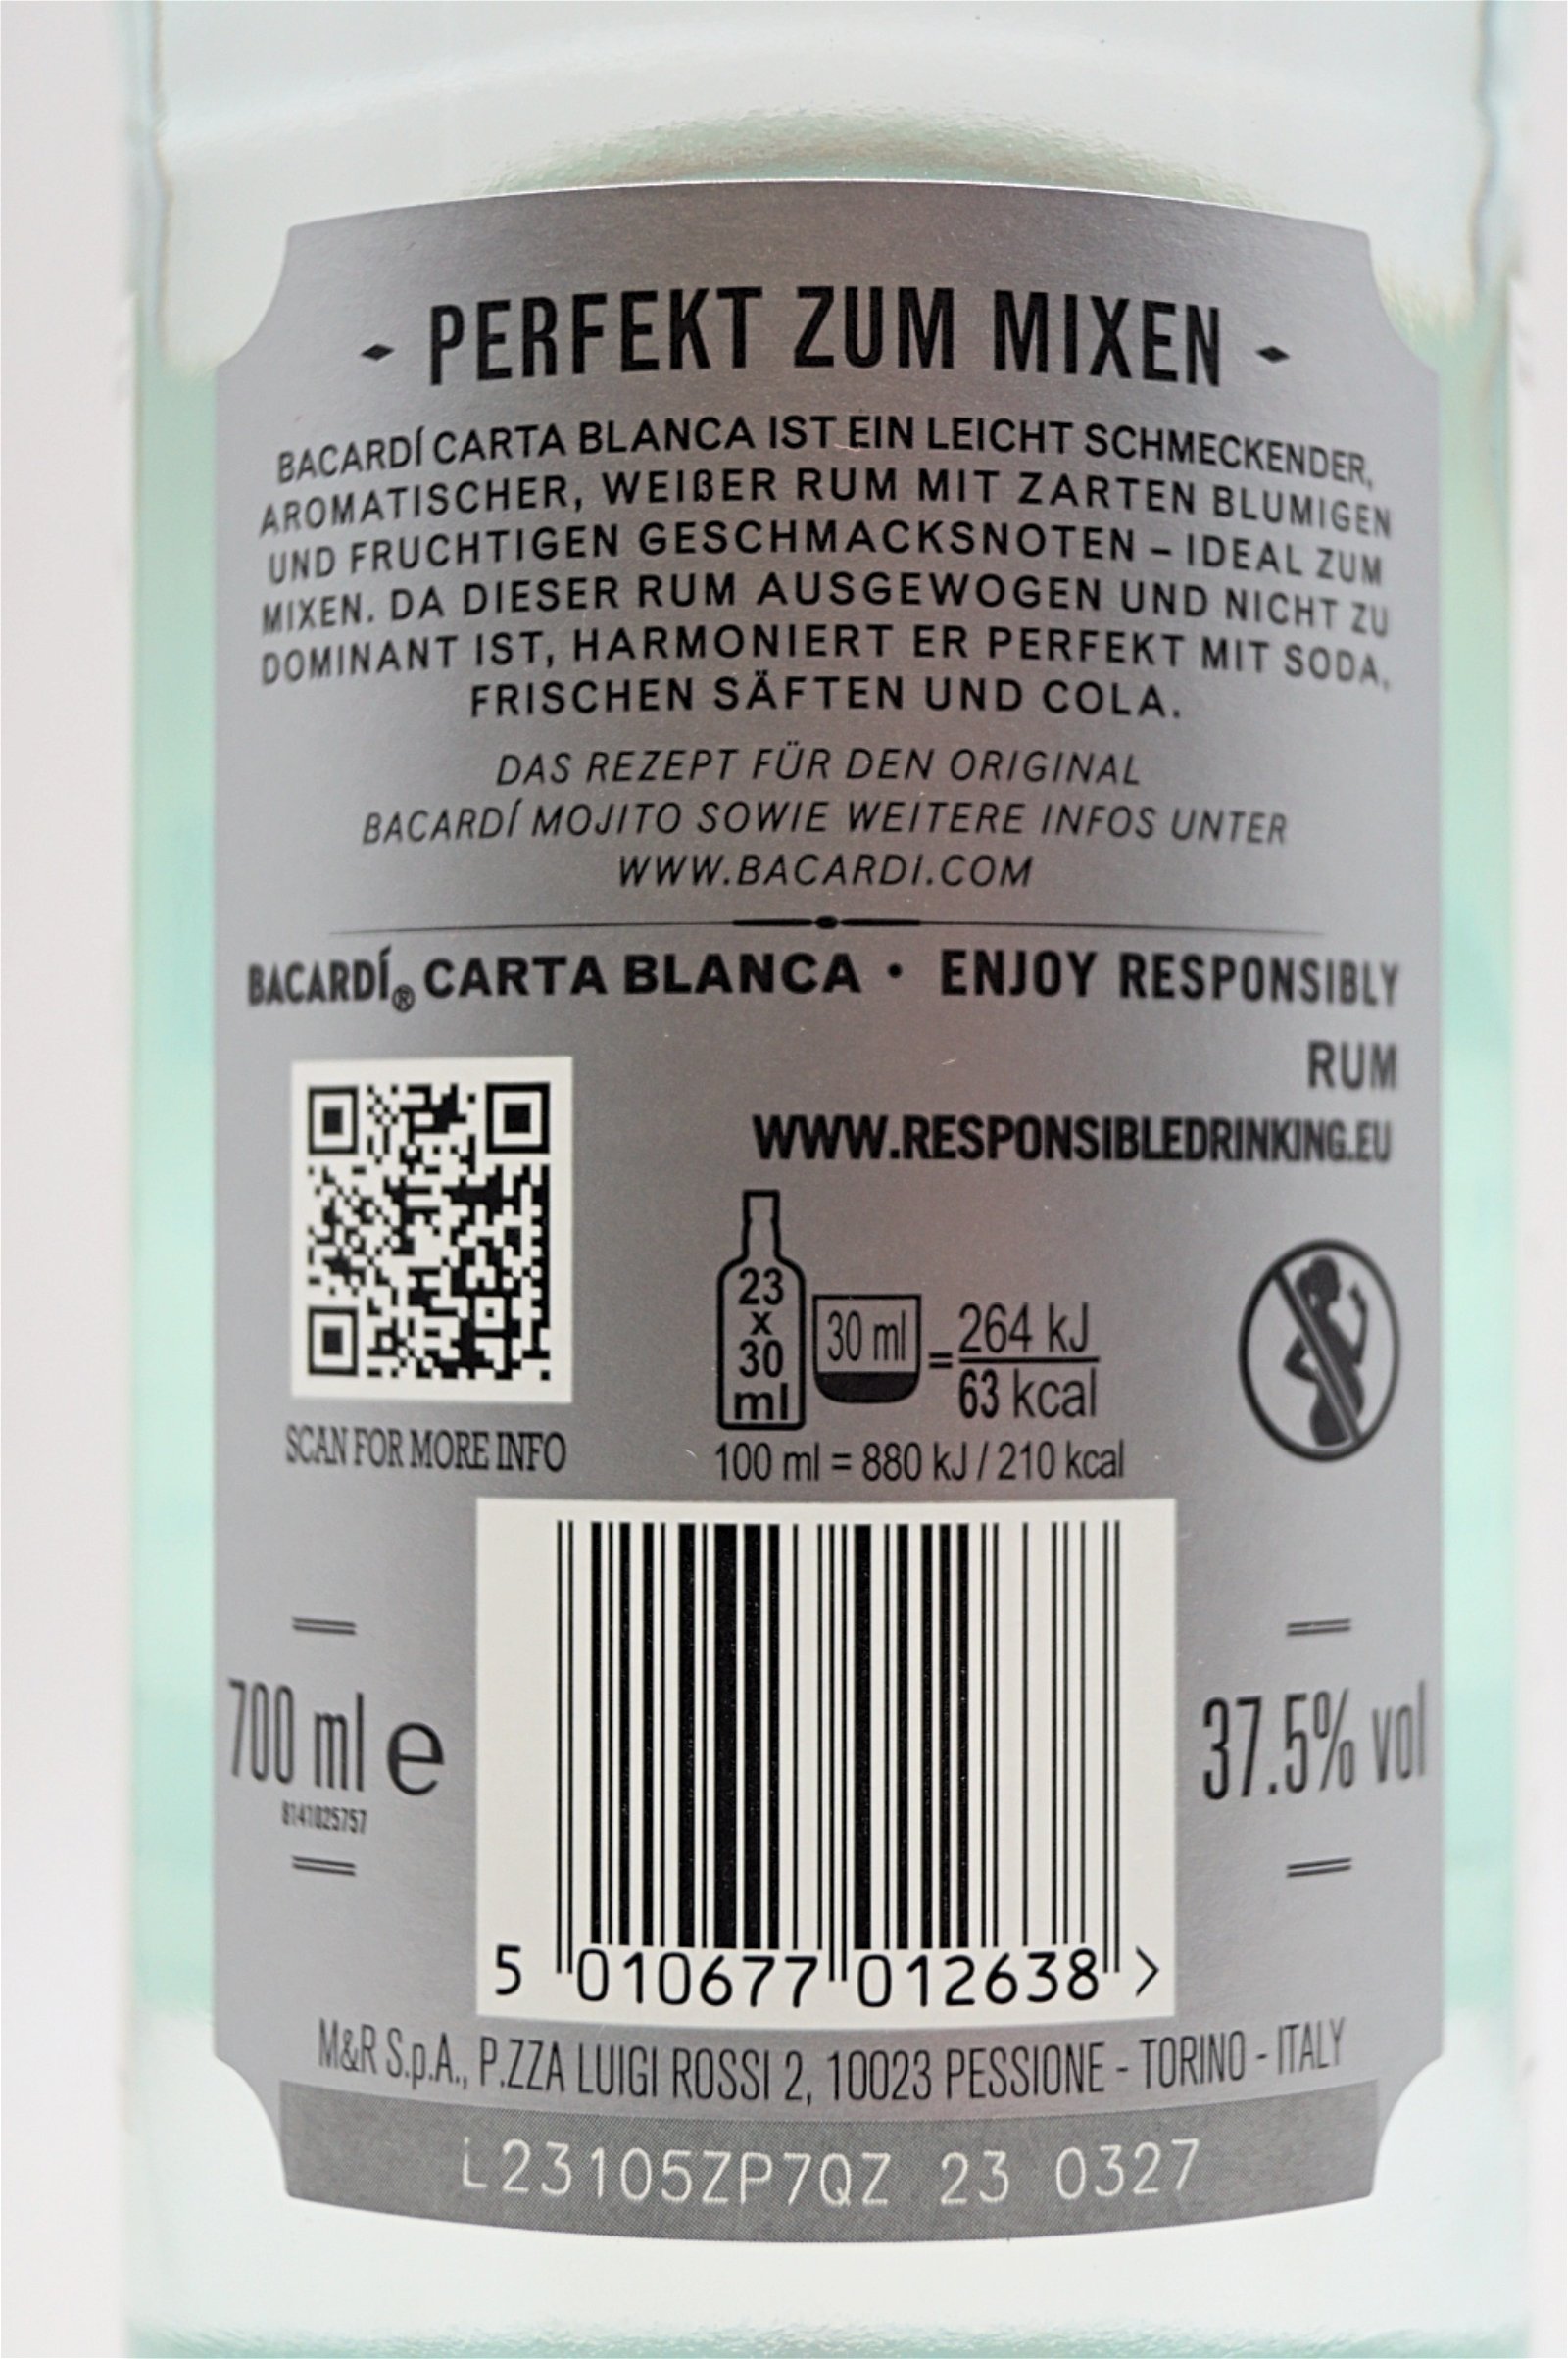 Bacardi Carta Blanca Superior White Rum